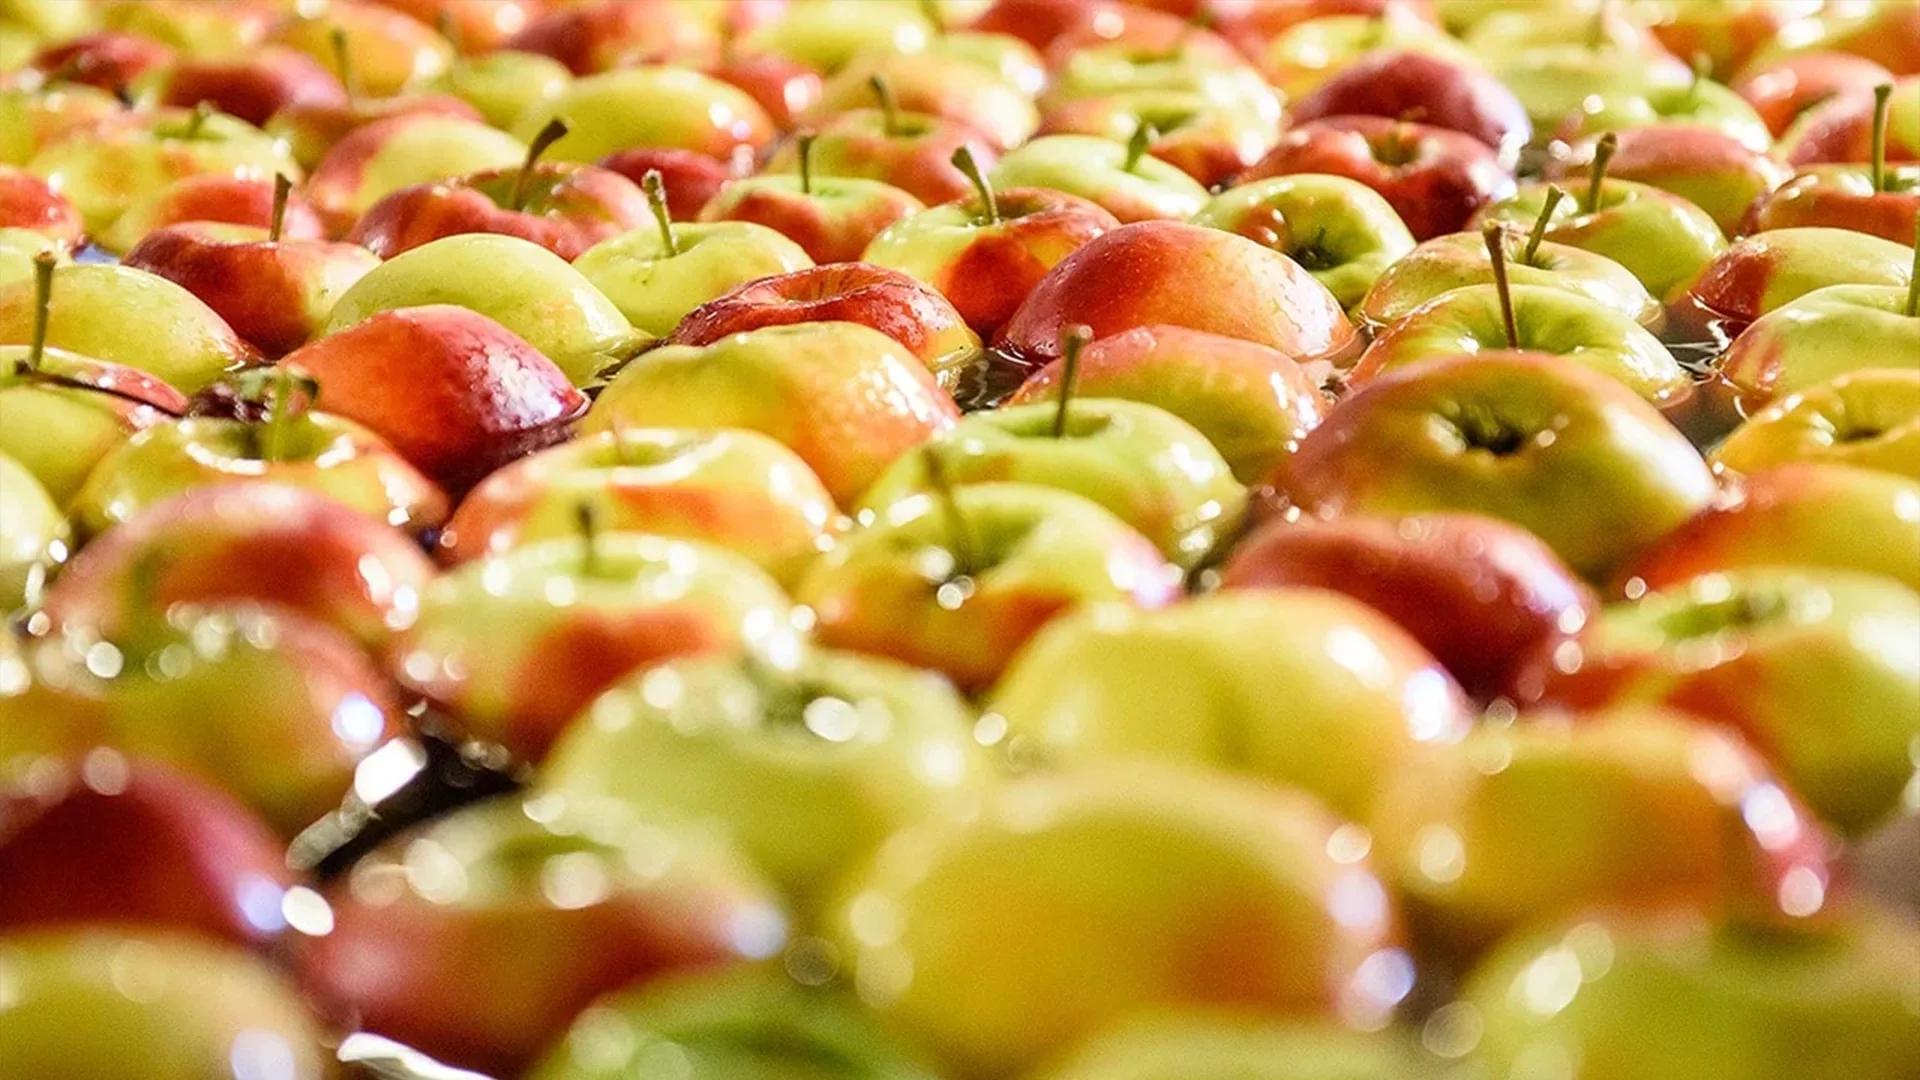 Post harvest fruit processing line resized for web